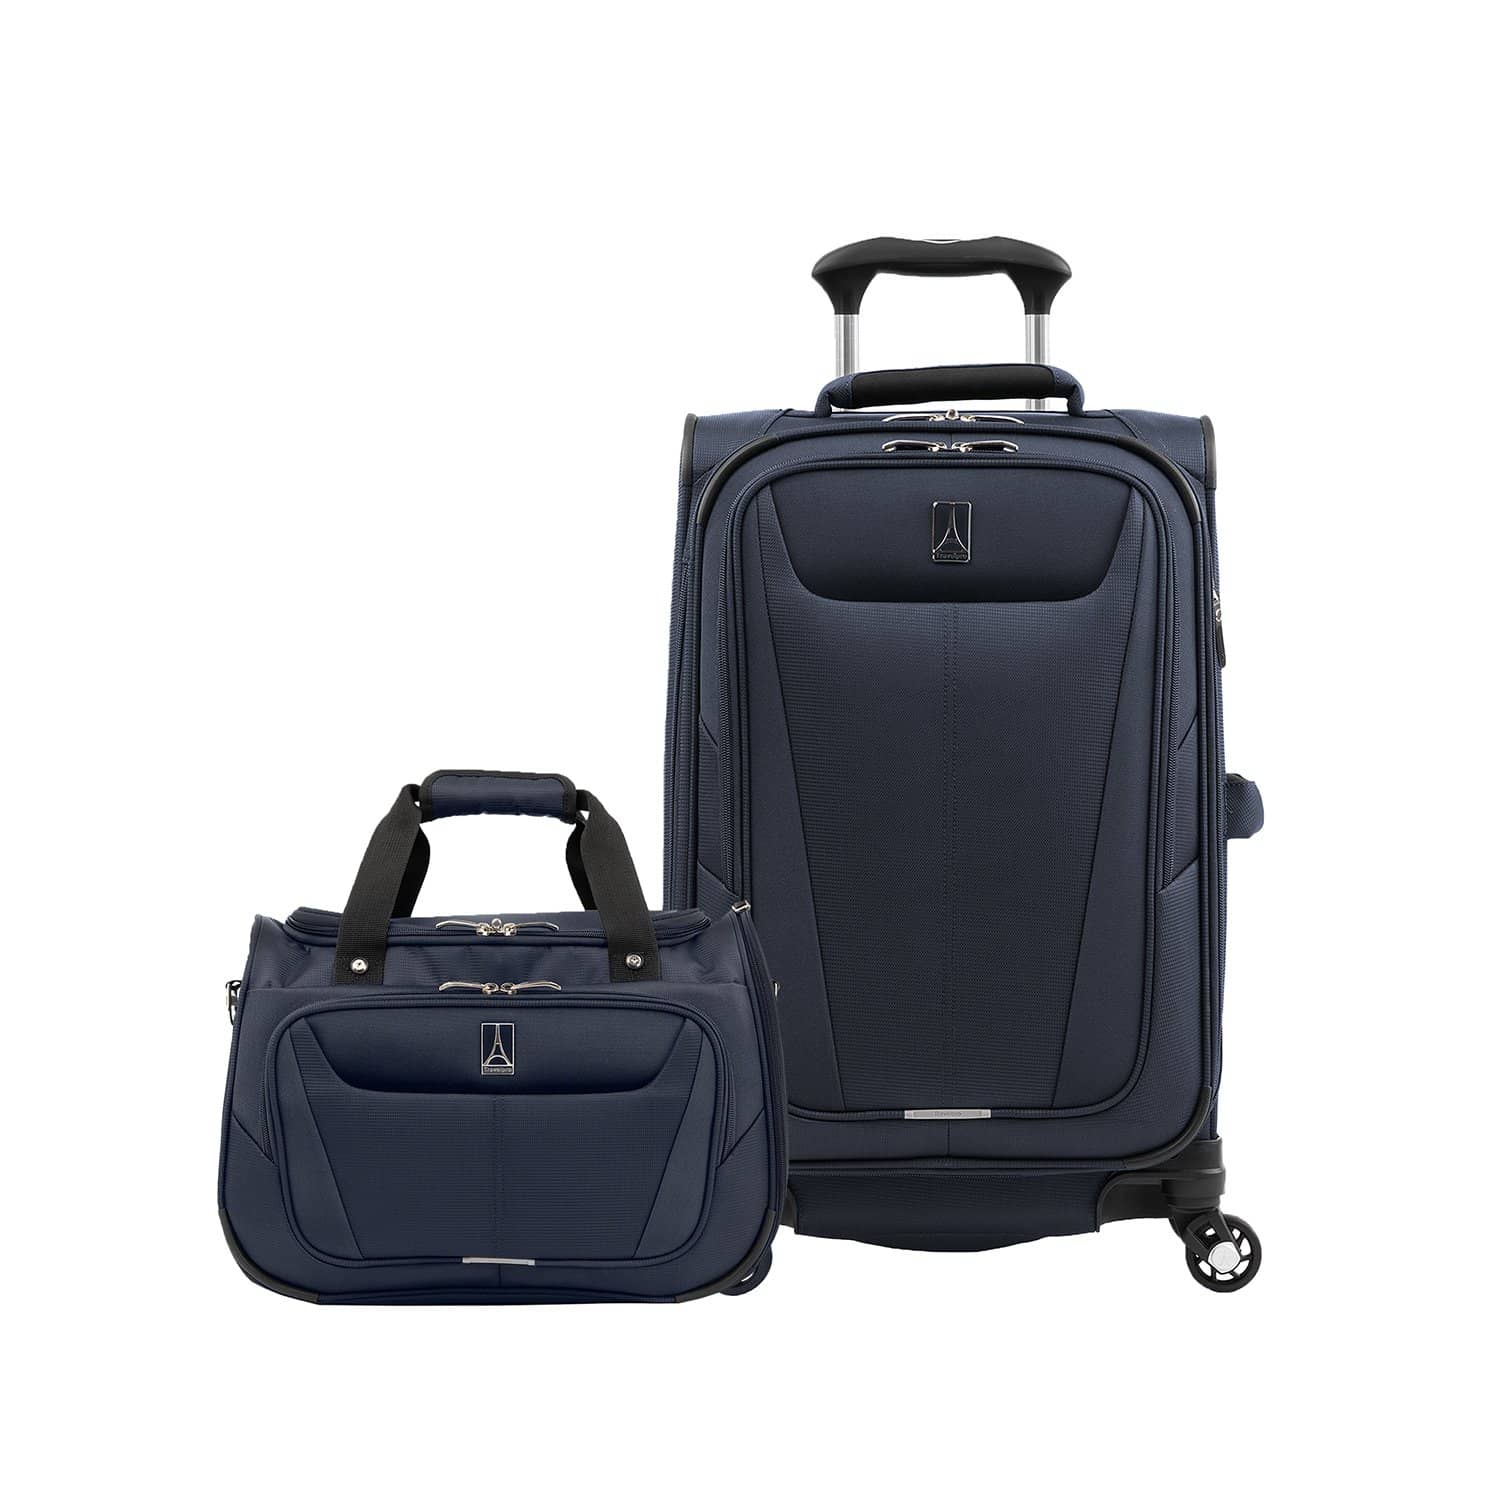 Travelpro Maxlite® 5 Carry Me Away - Luggage Set